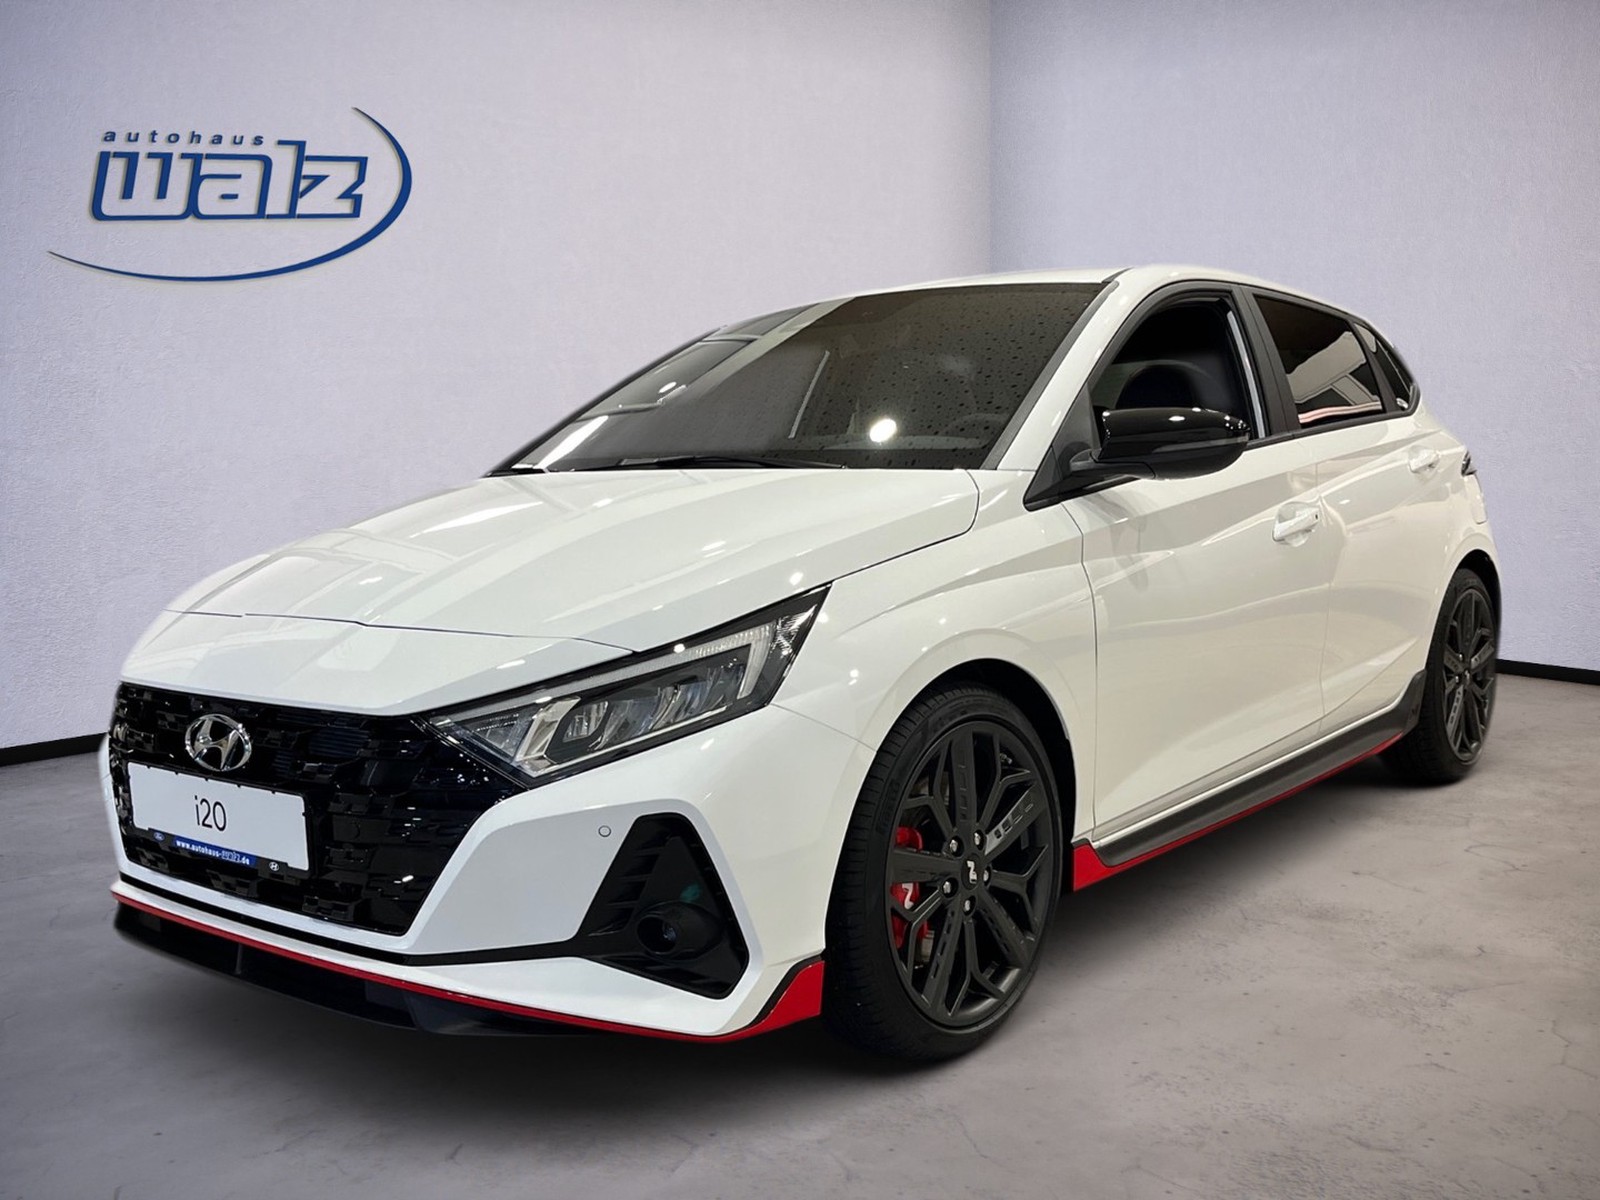 Hyundai i20 N Performance neu kaufen in Calw Preis 29690 eur - Int